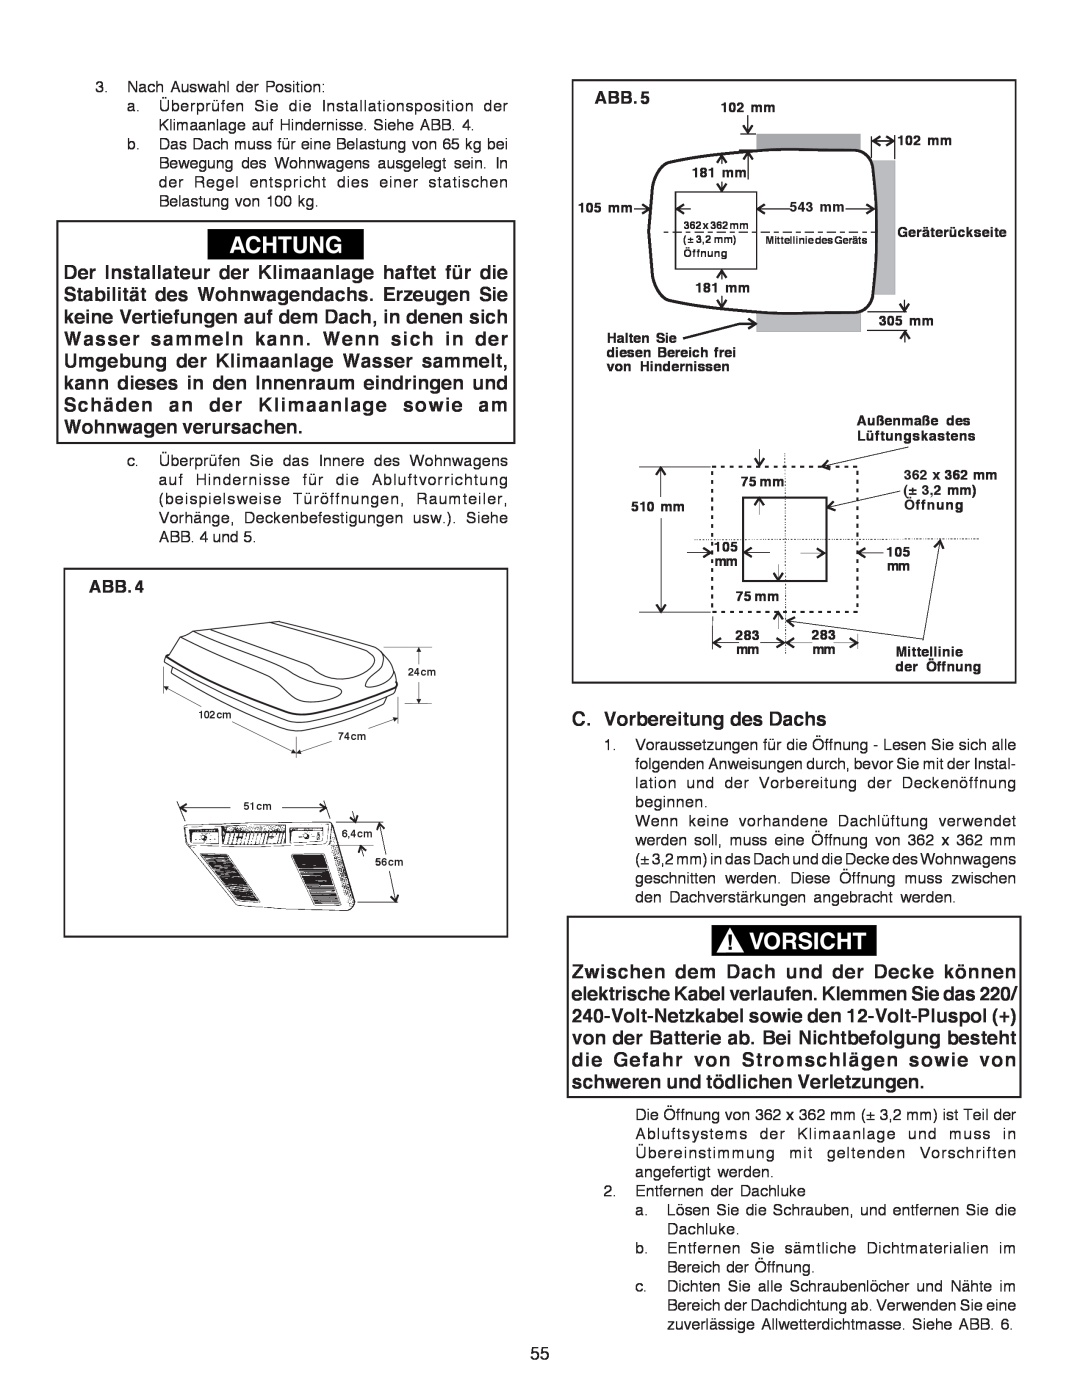 Dometic B3200 manual C. Vorbereitung des Dachs, Abb 